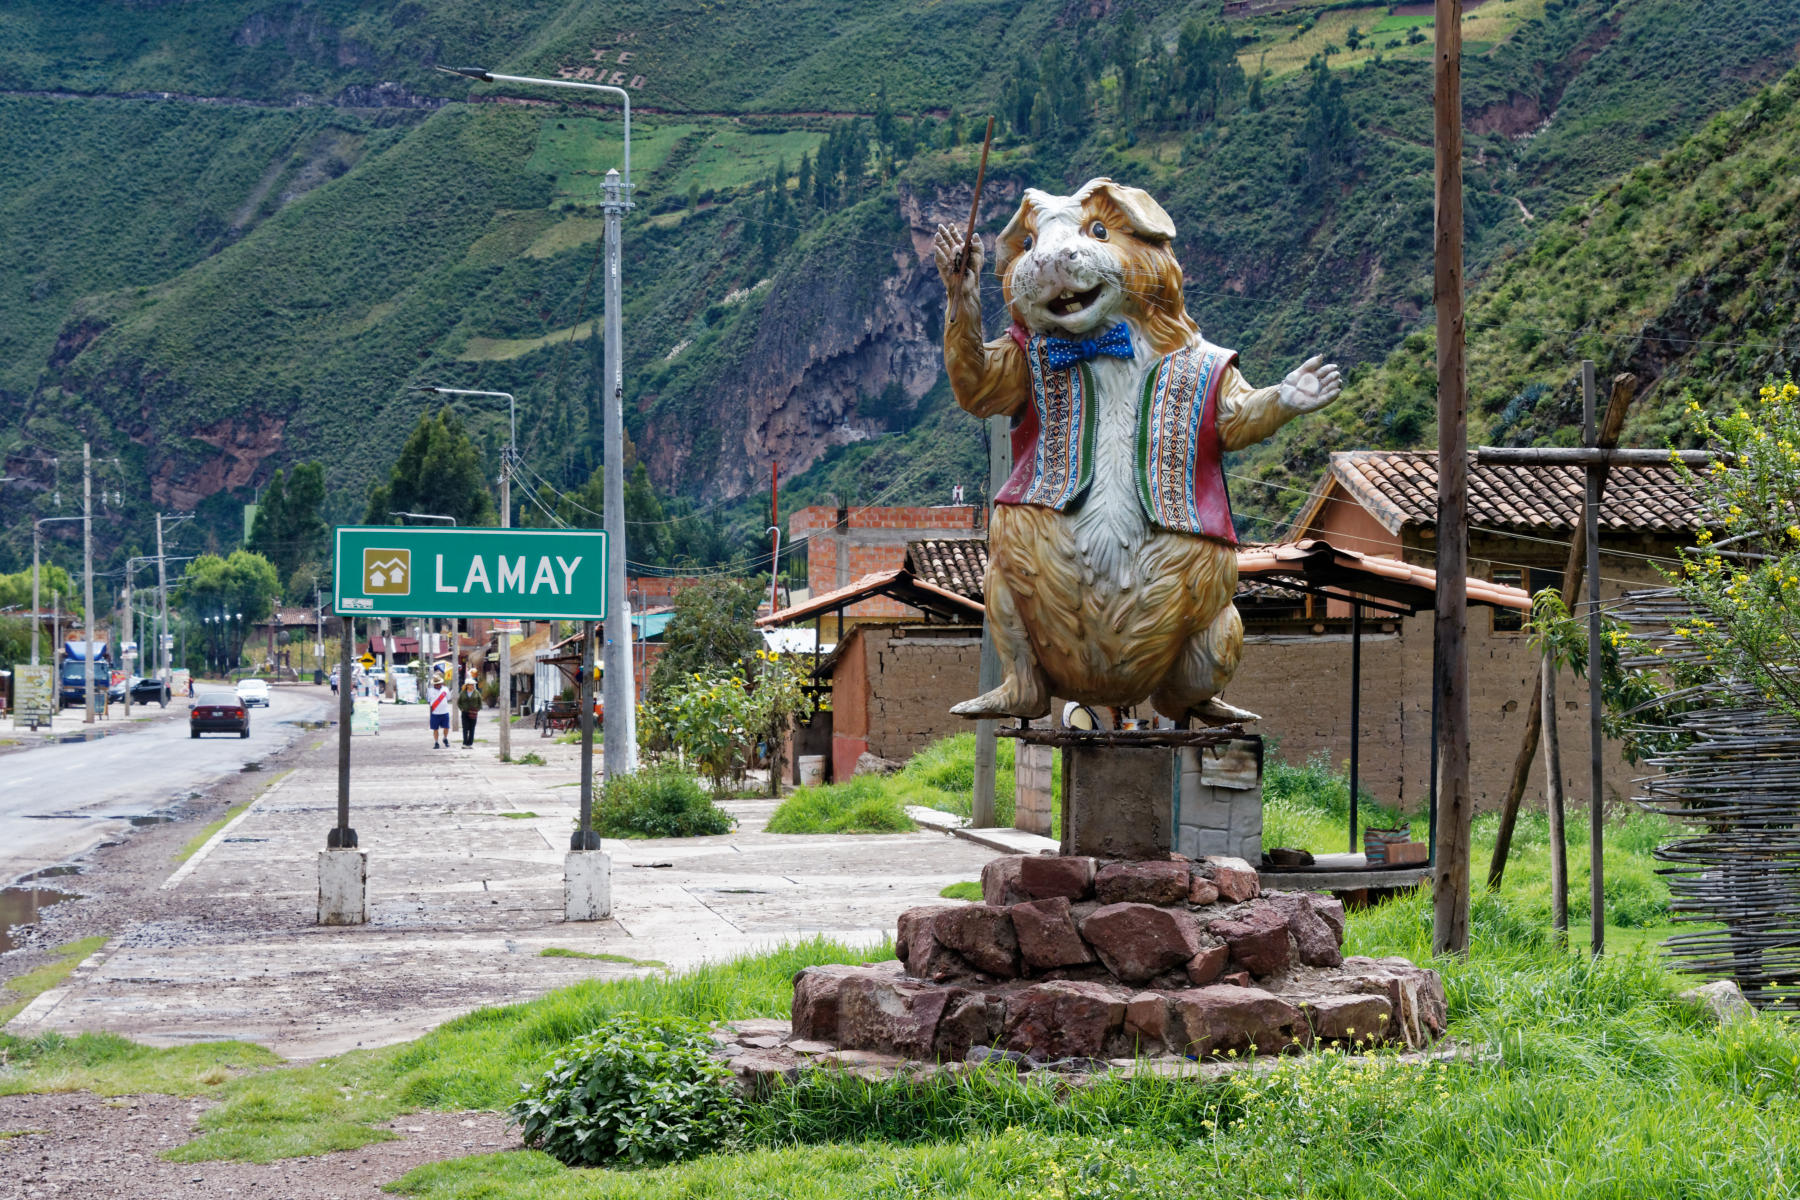 Lamay - Cuy Central